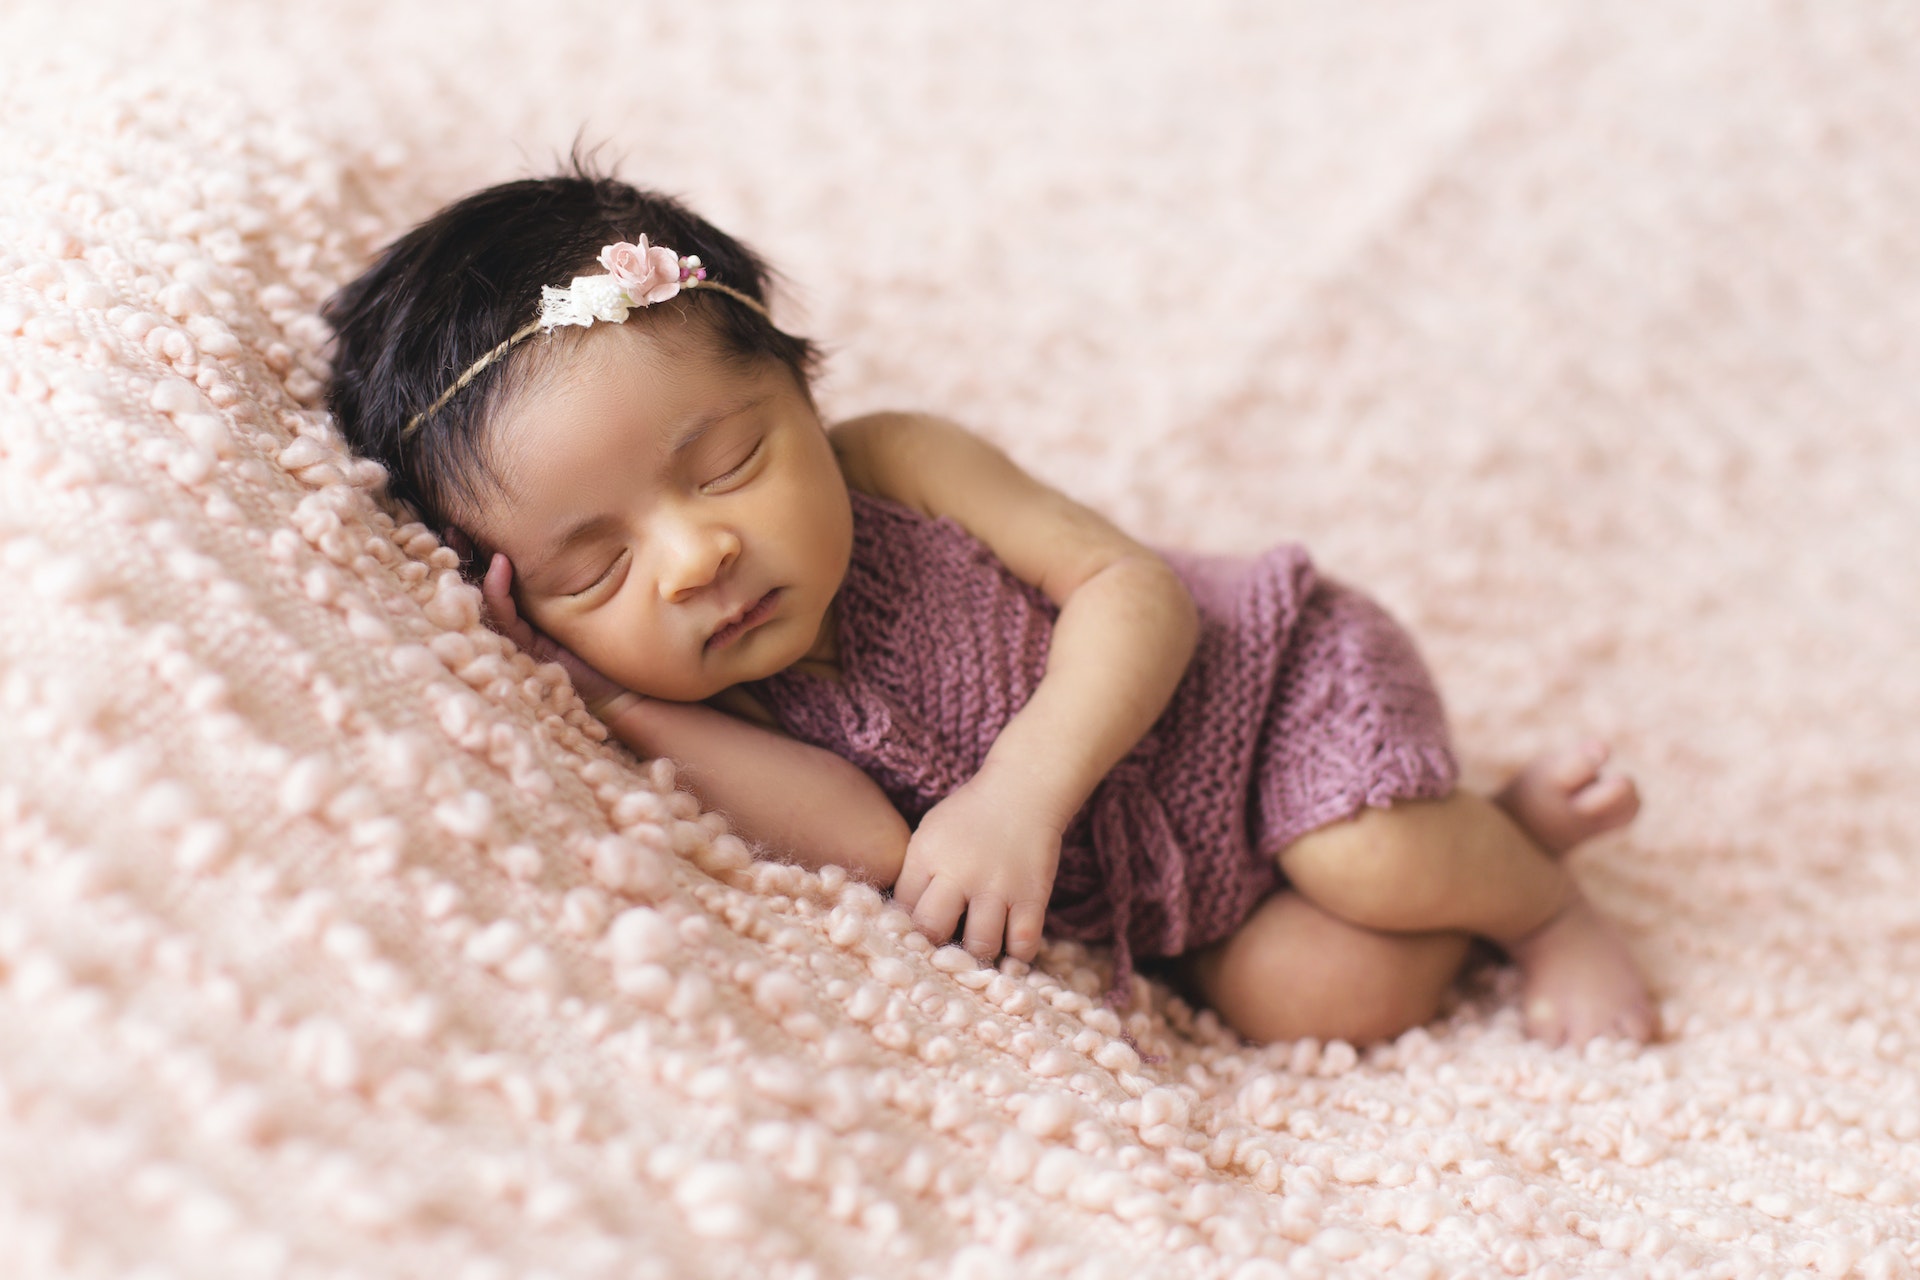 Newborn baby sleeping on pink blanket